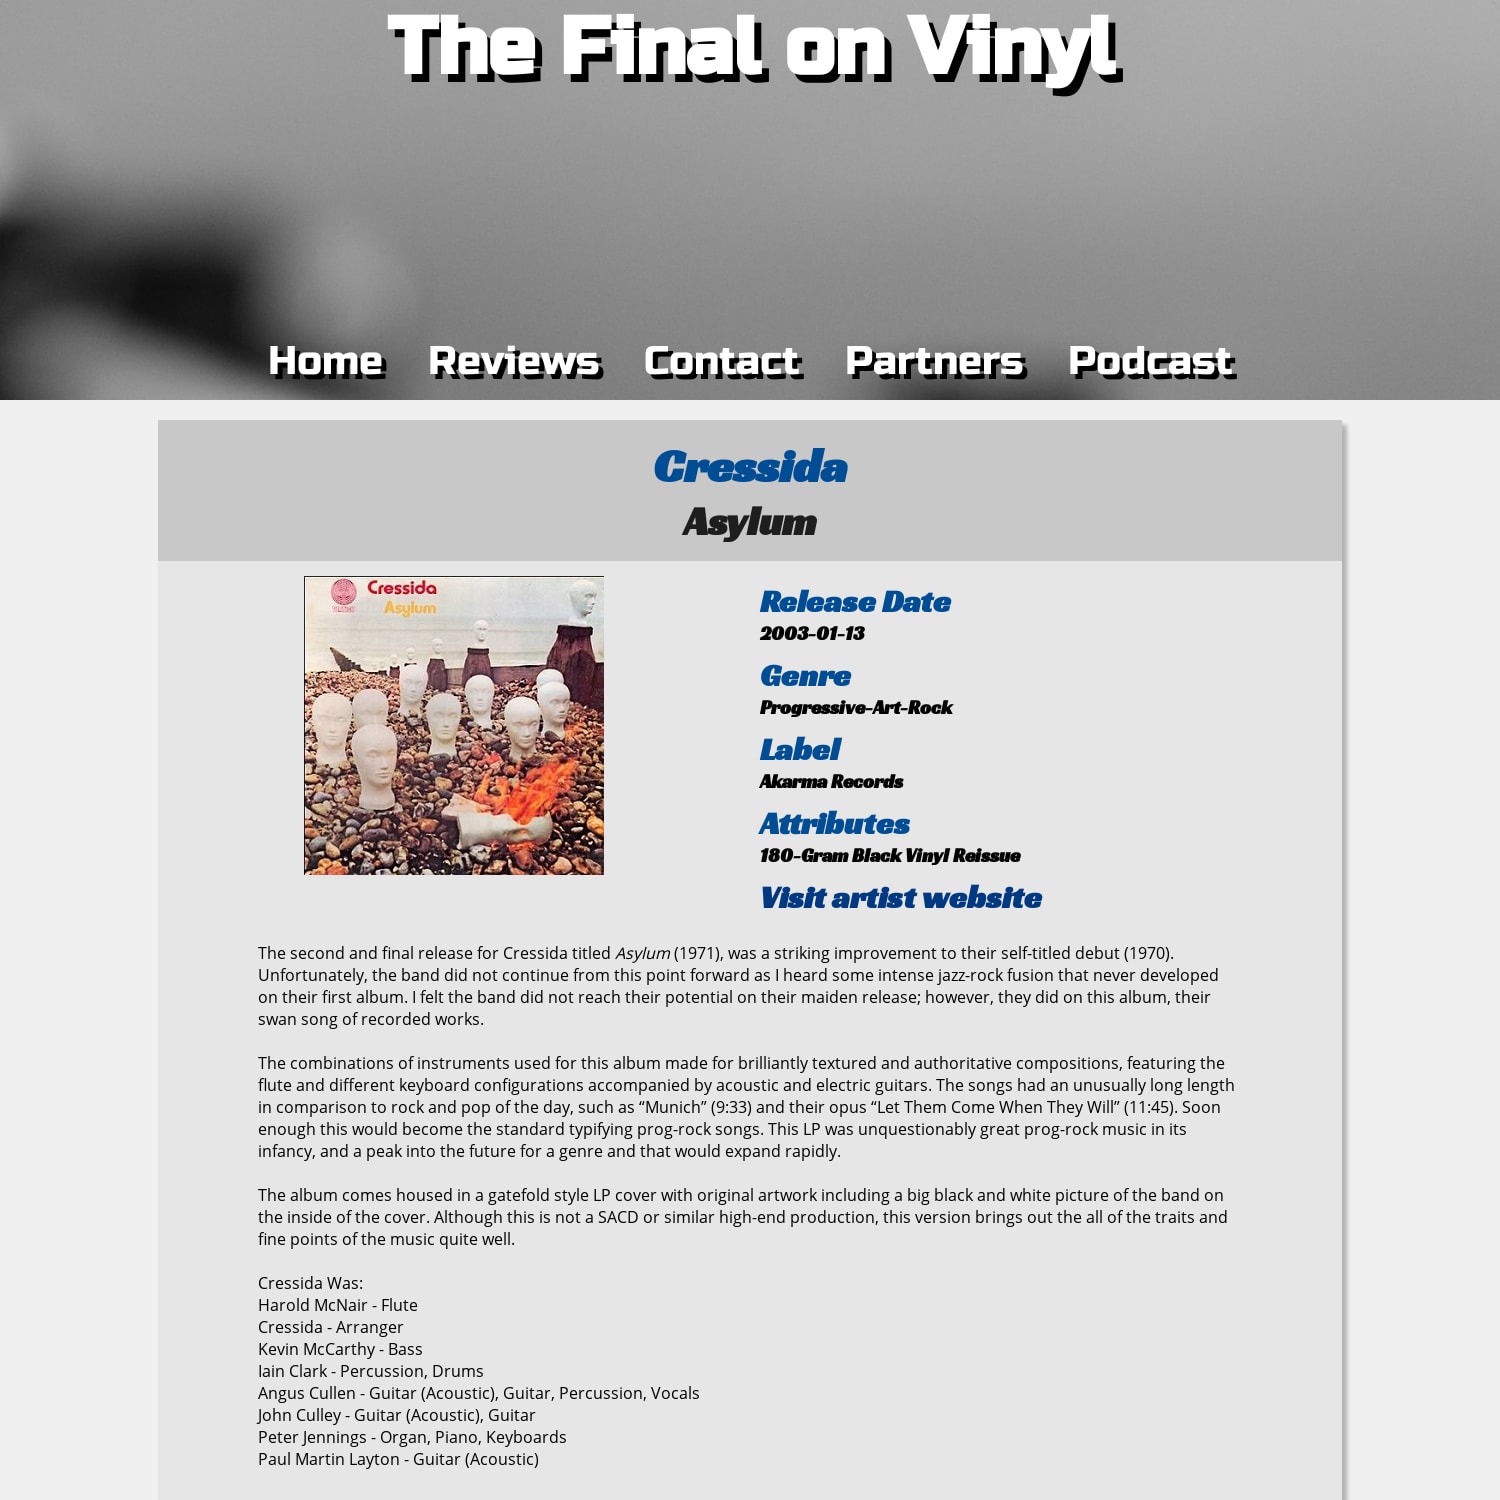 The Final On Vinyl